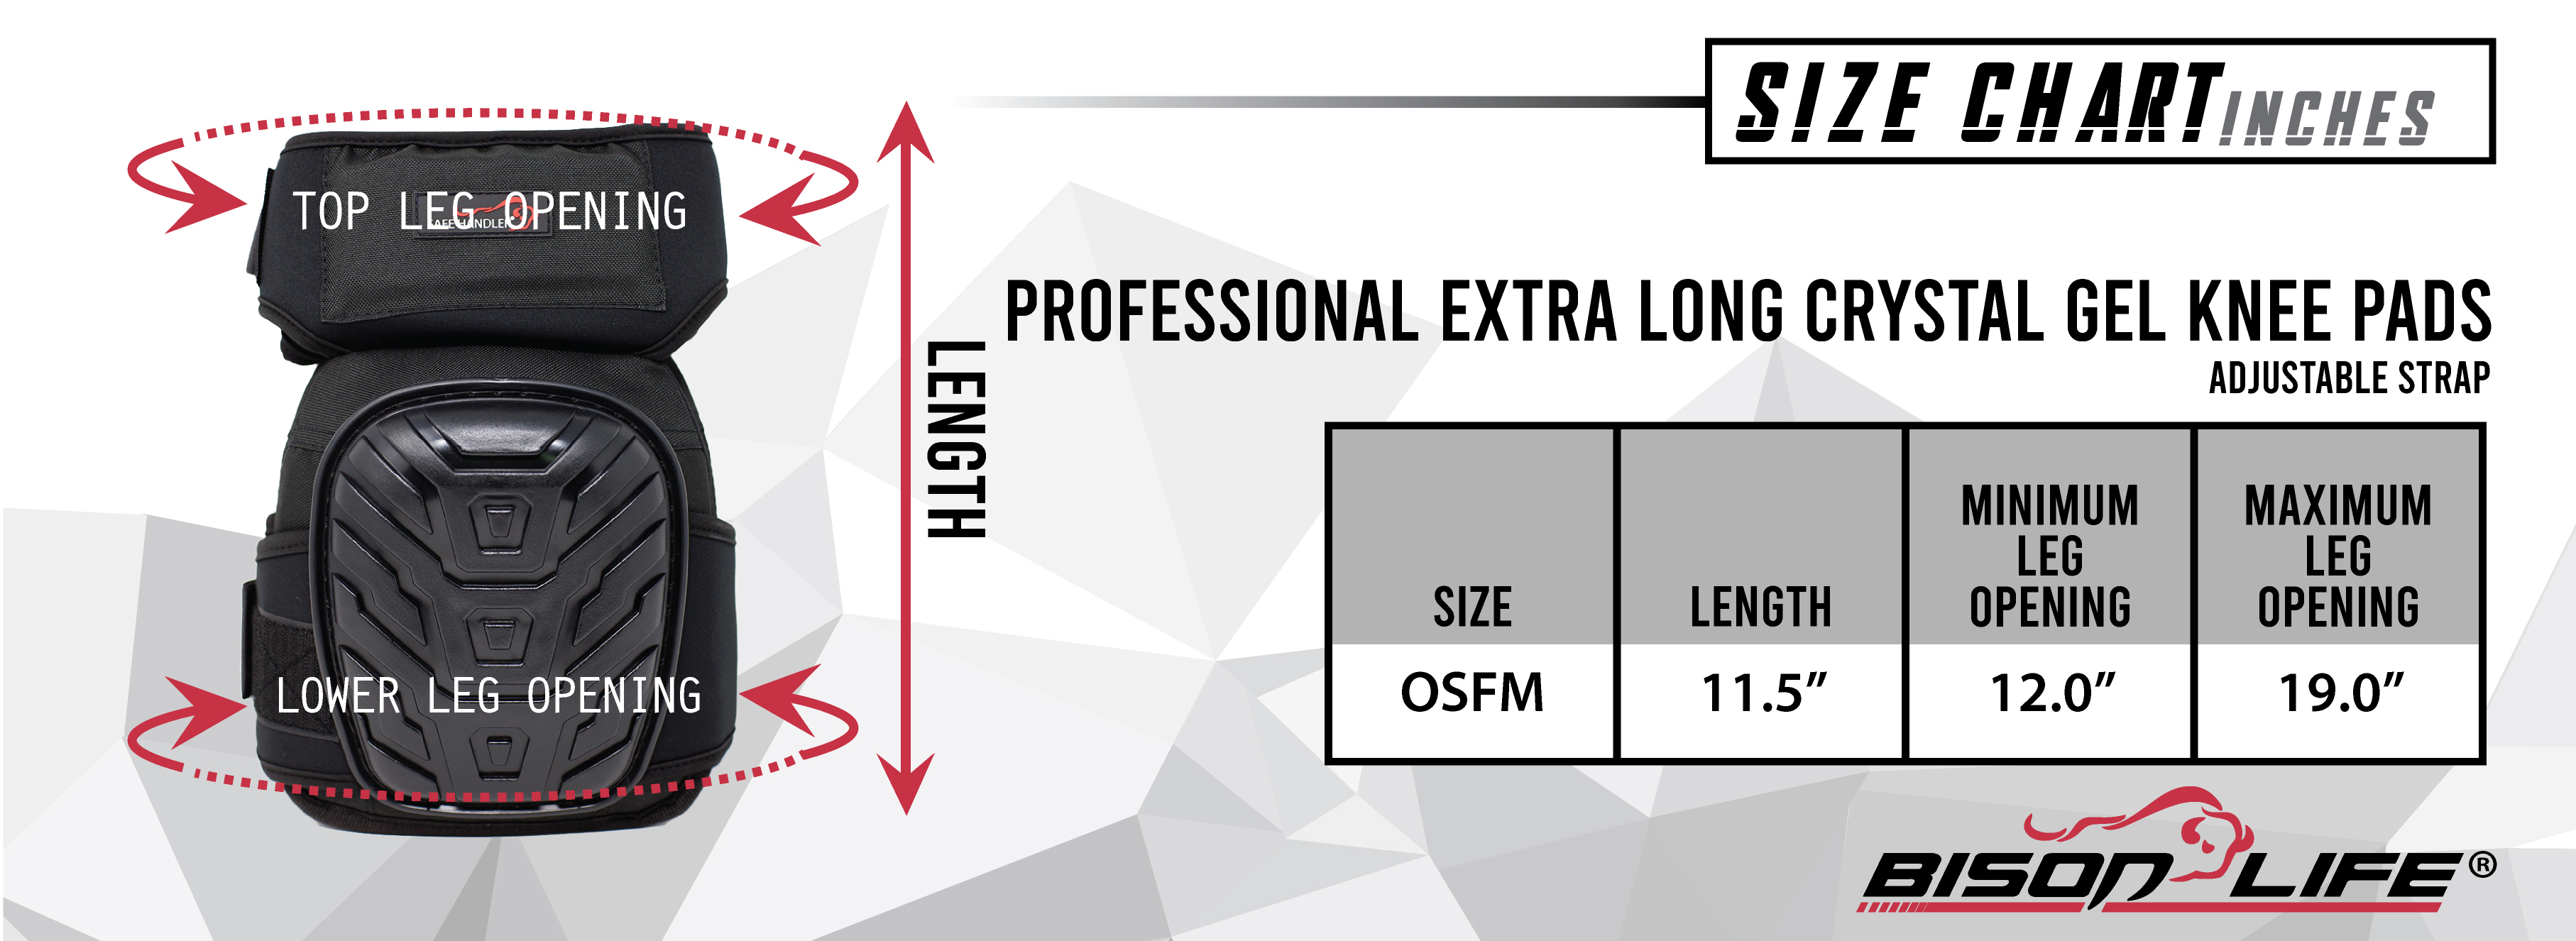 Safe Handler Professional Extra Long Crystal Gel Knee Pads Size Chart